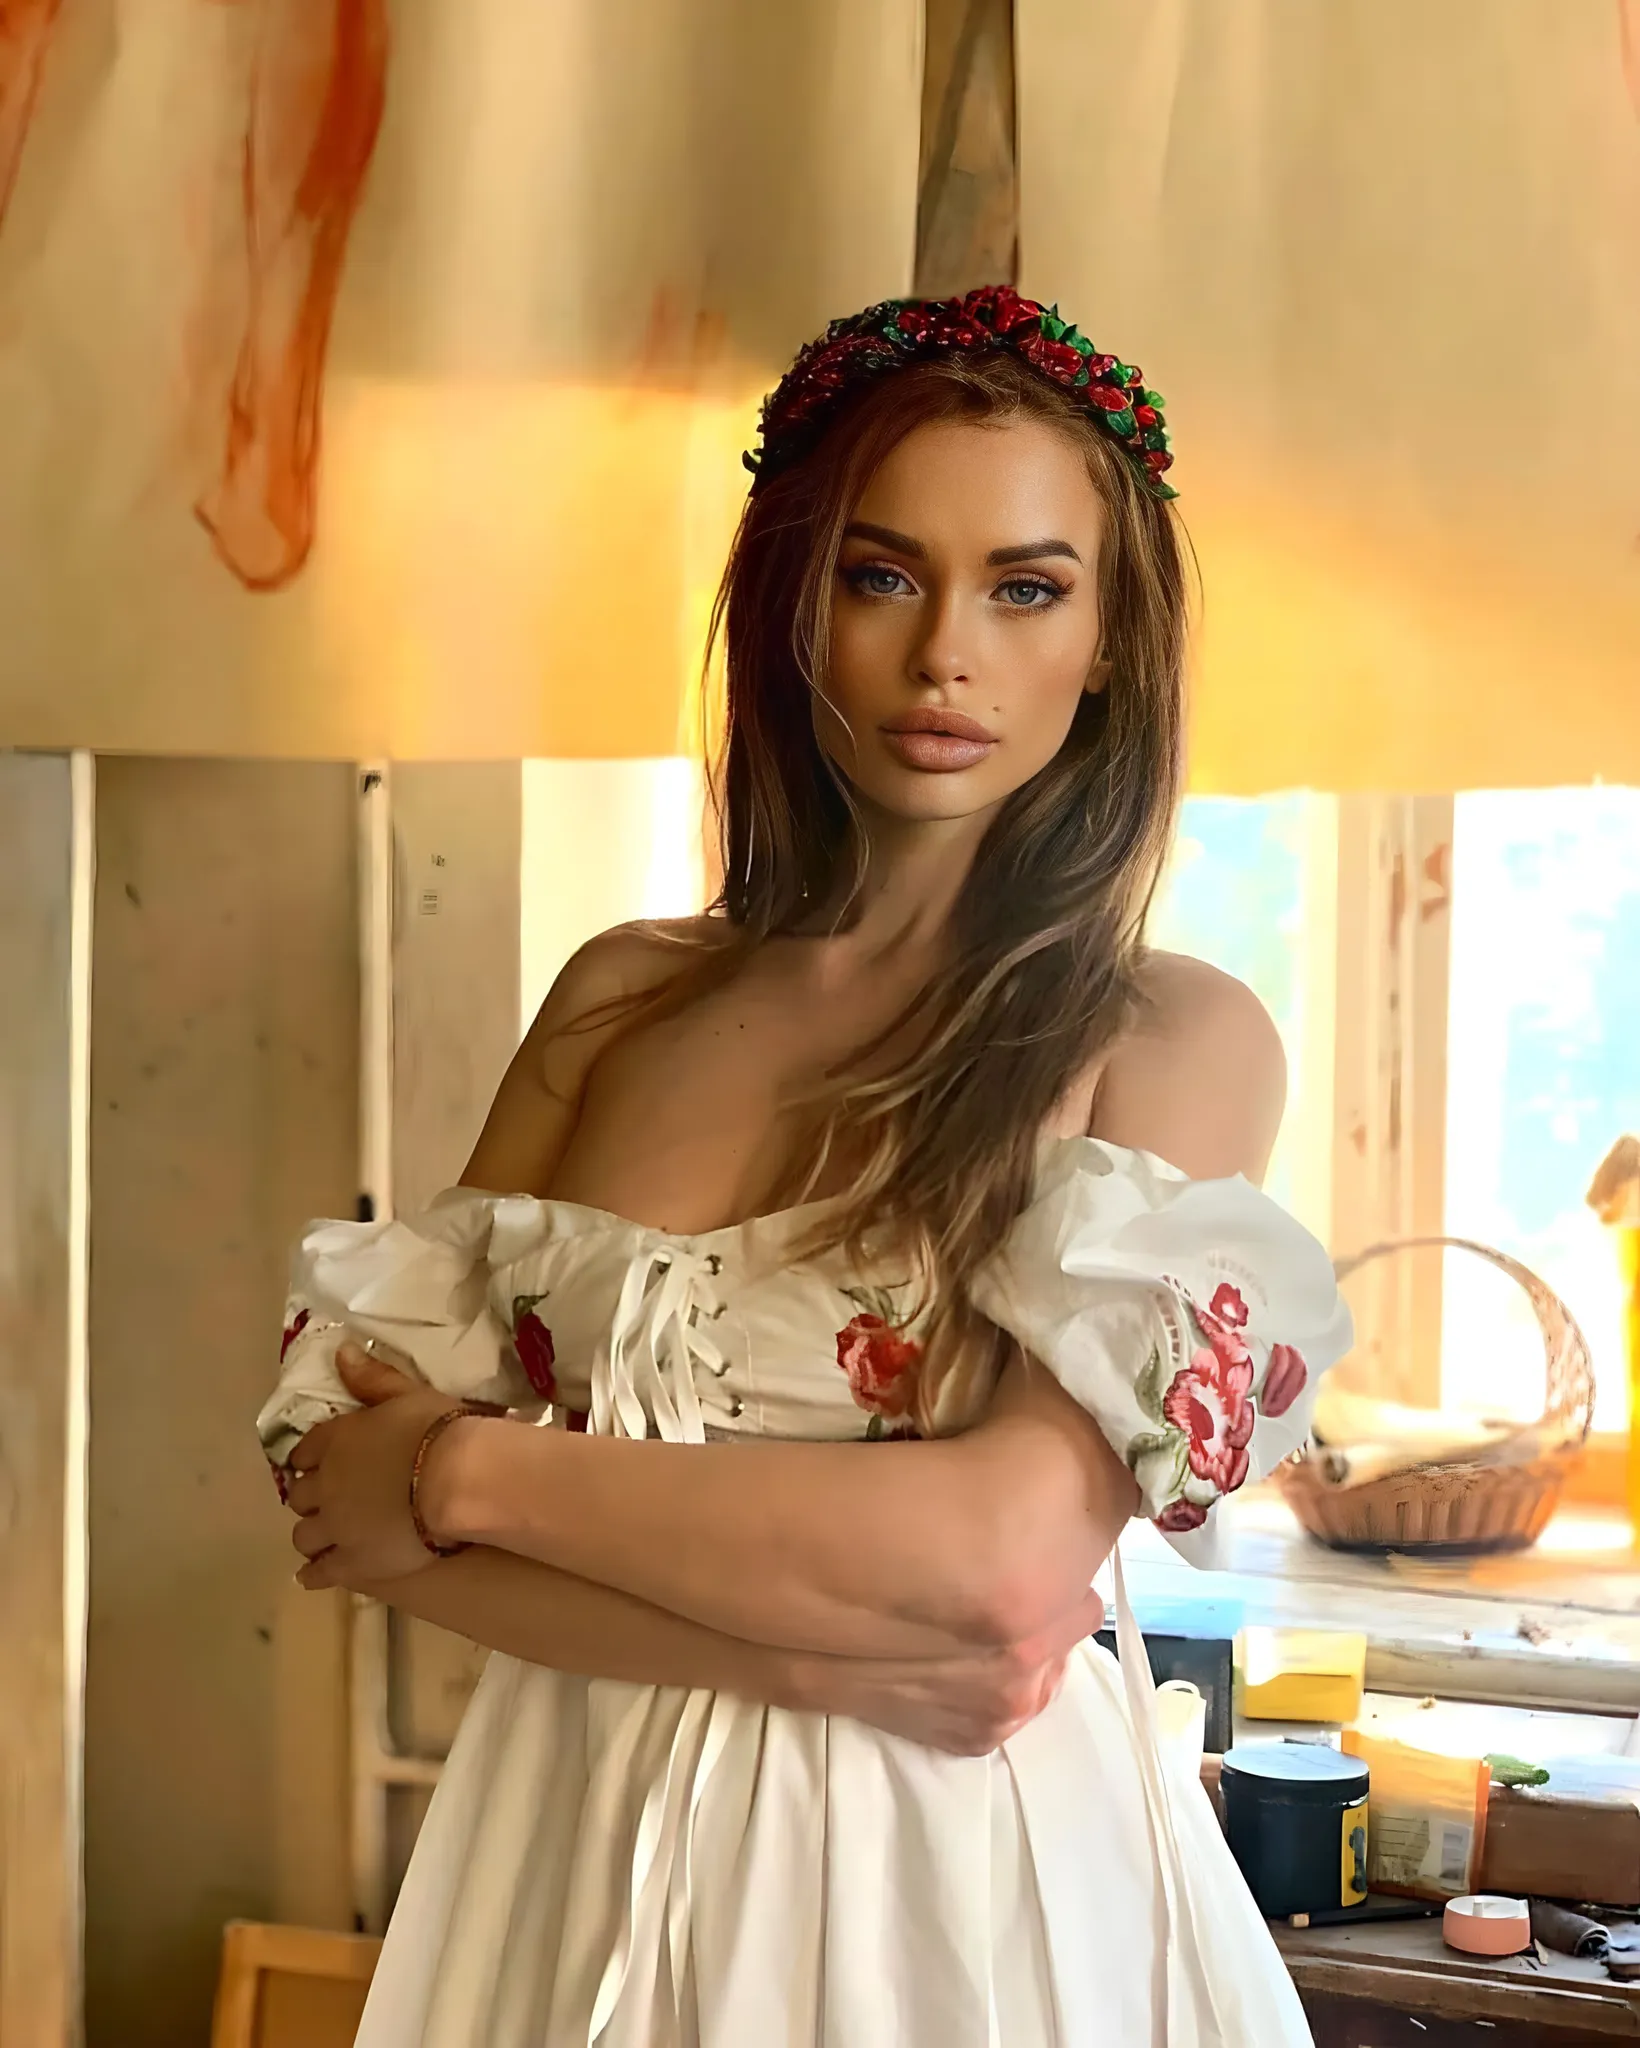 Julia russian dating ads